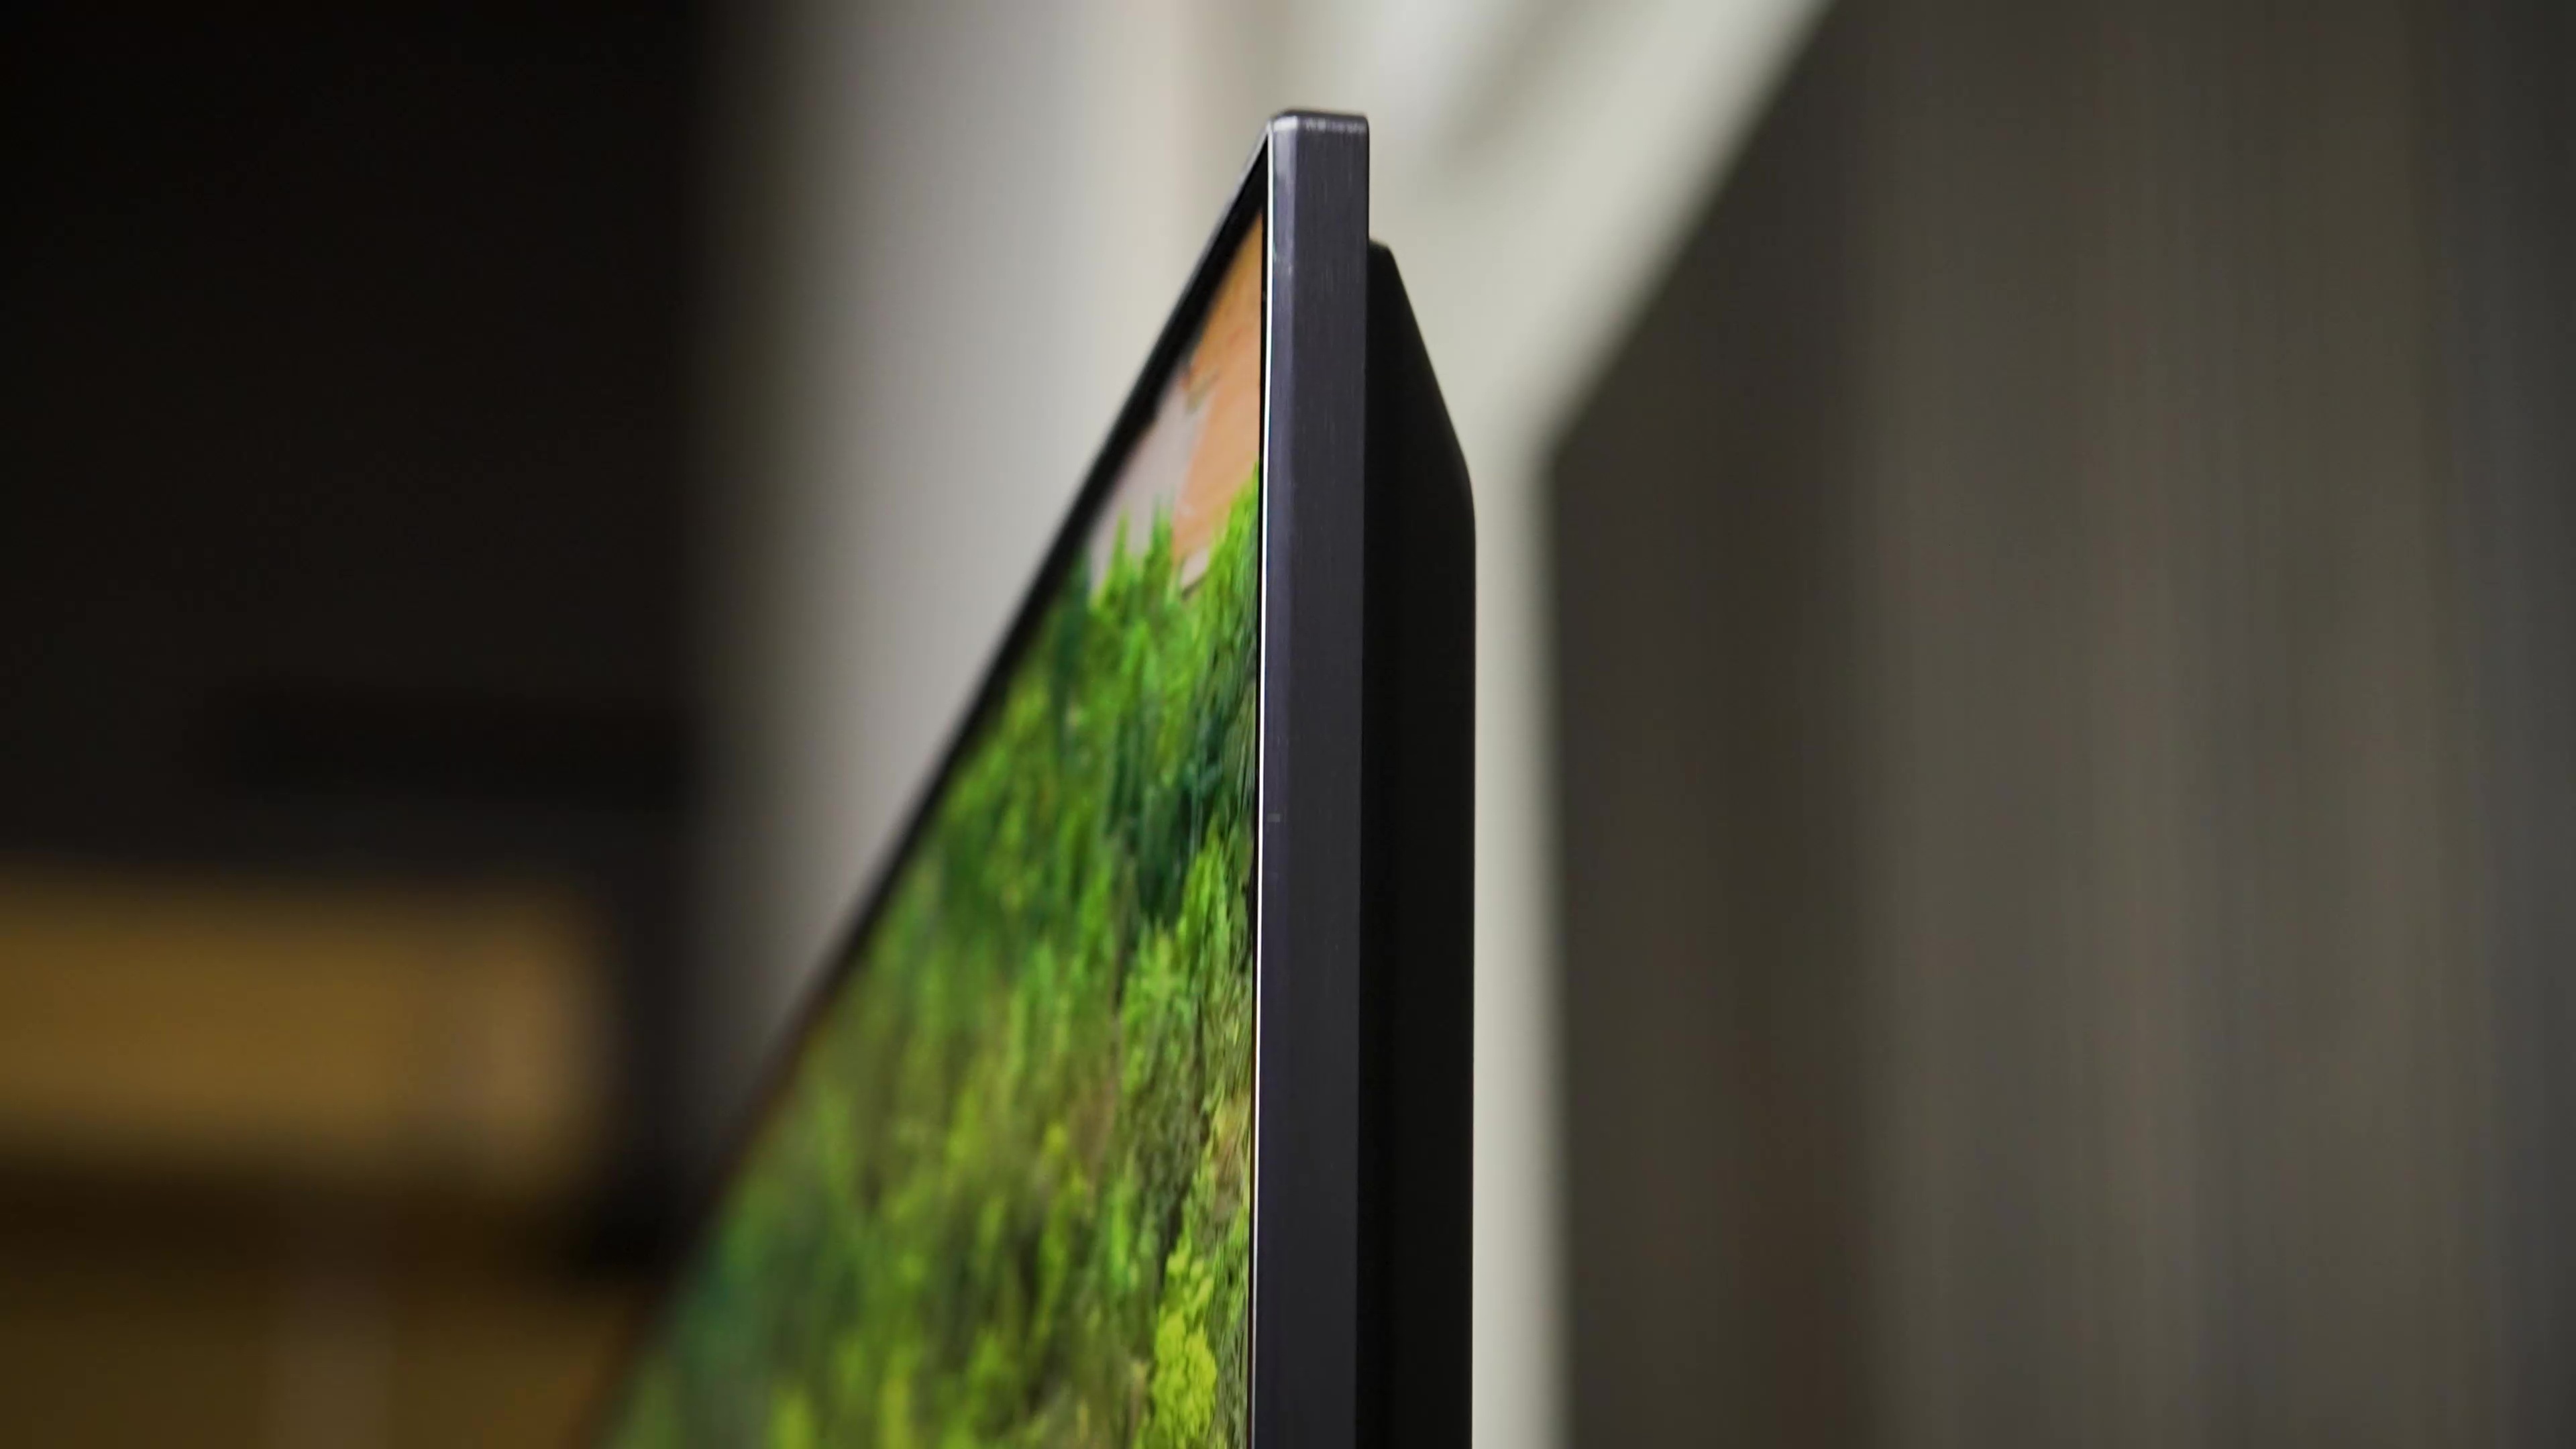 Hisense U7K Mini LED TV Review: Explore Outstanding Picture Clarity - VM-One